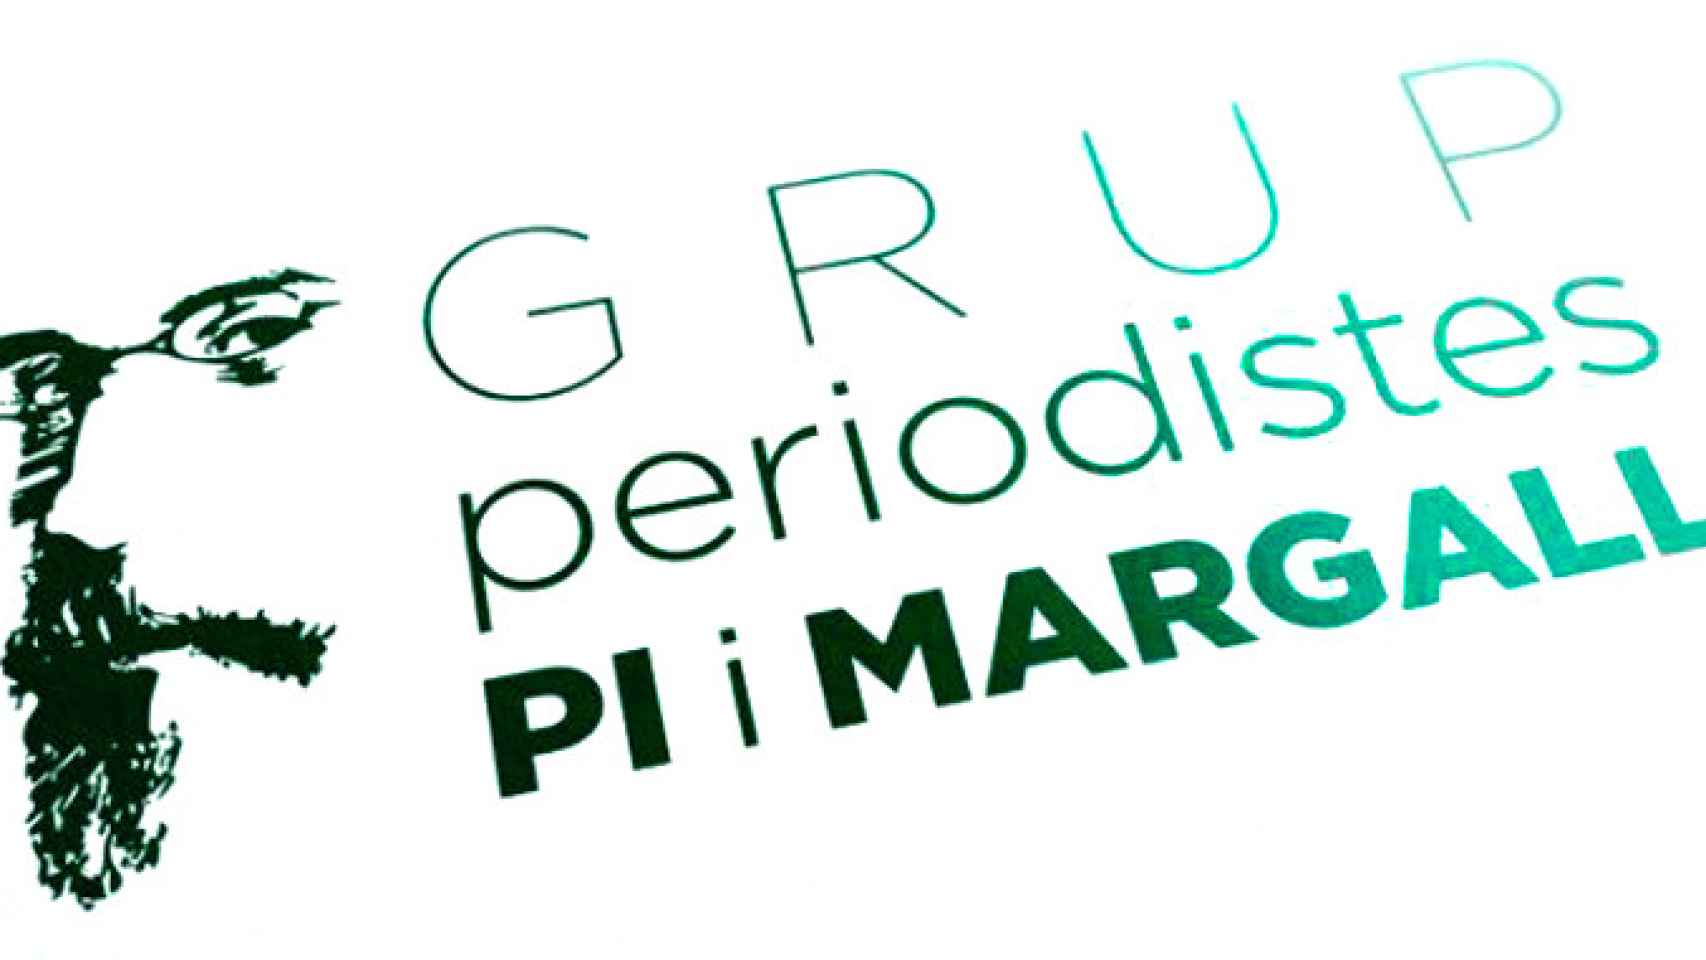 Grupo de Periodistas Pi i Margall, colectivo de periodistas